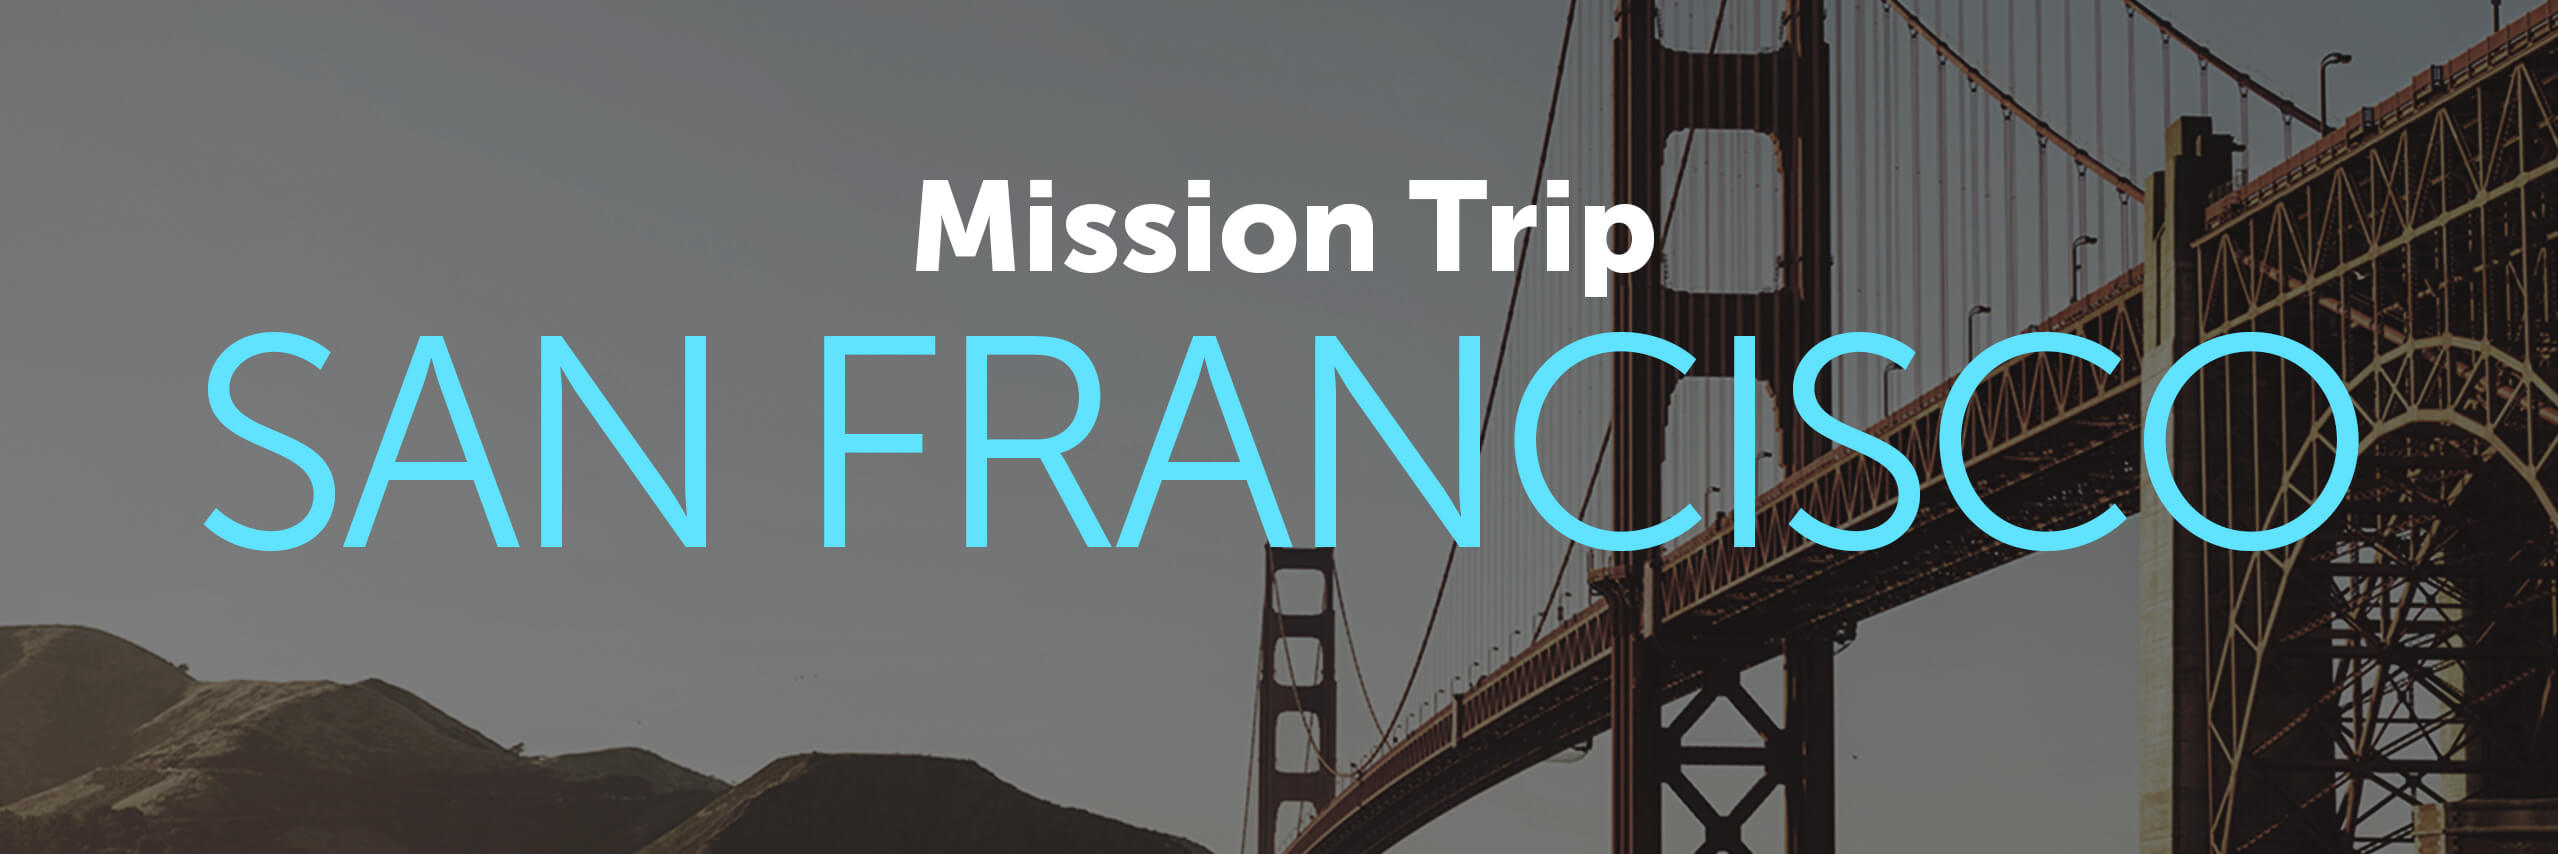 San Francisco Mission Trip